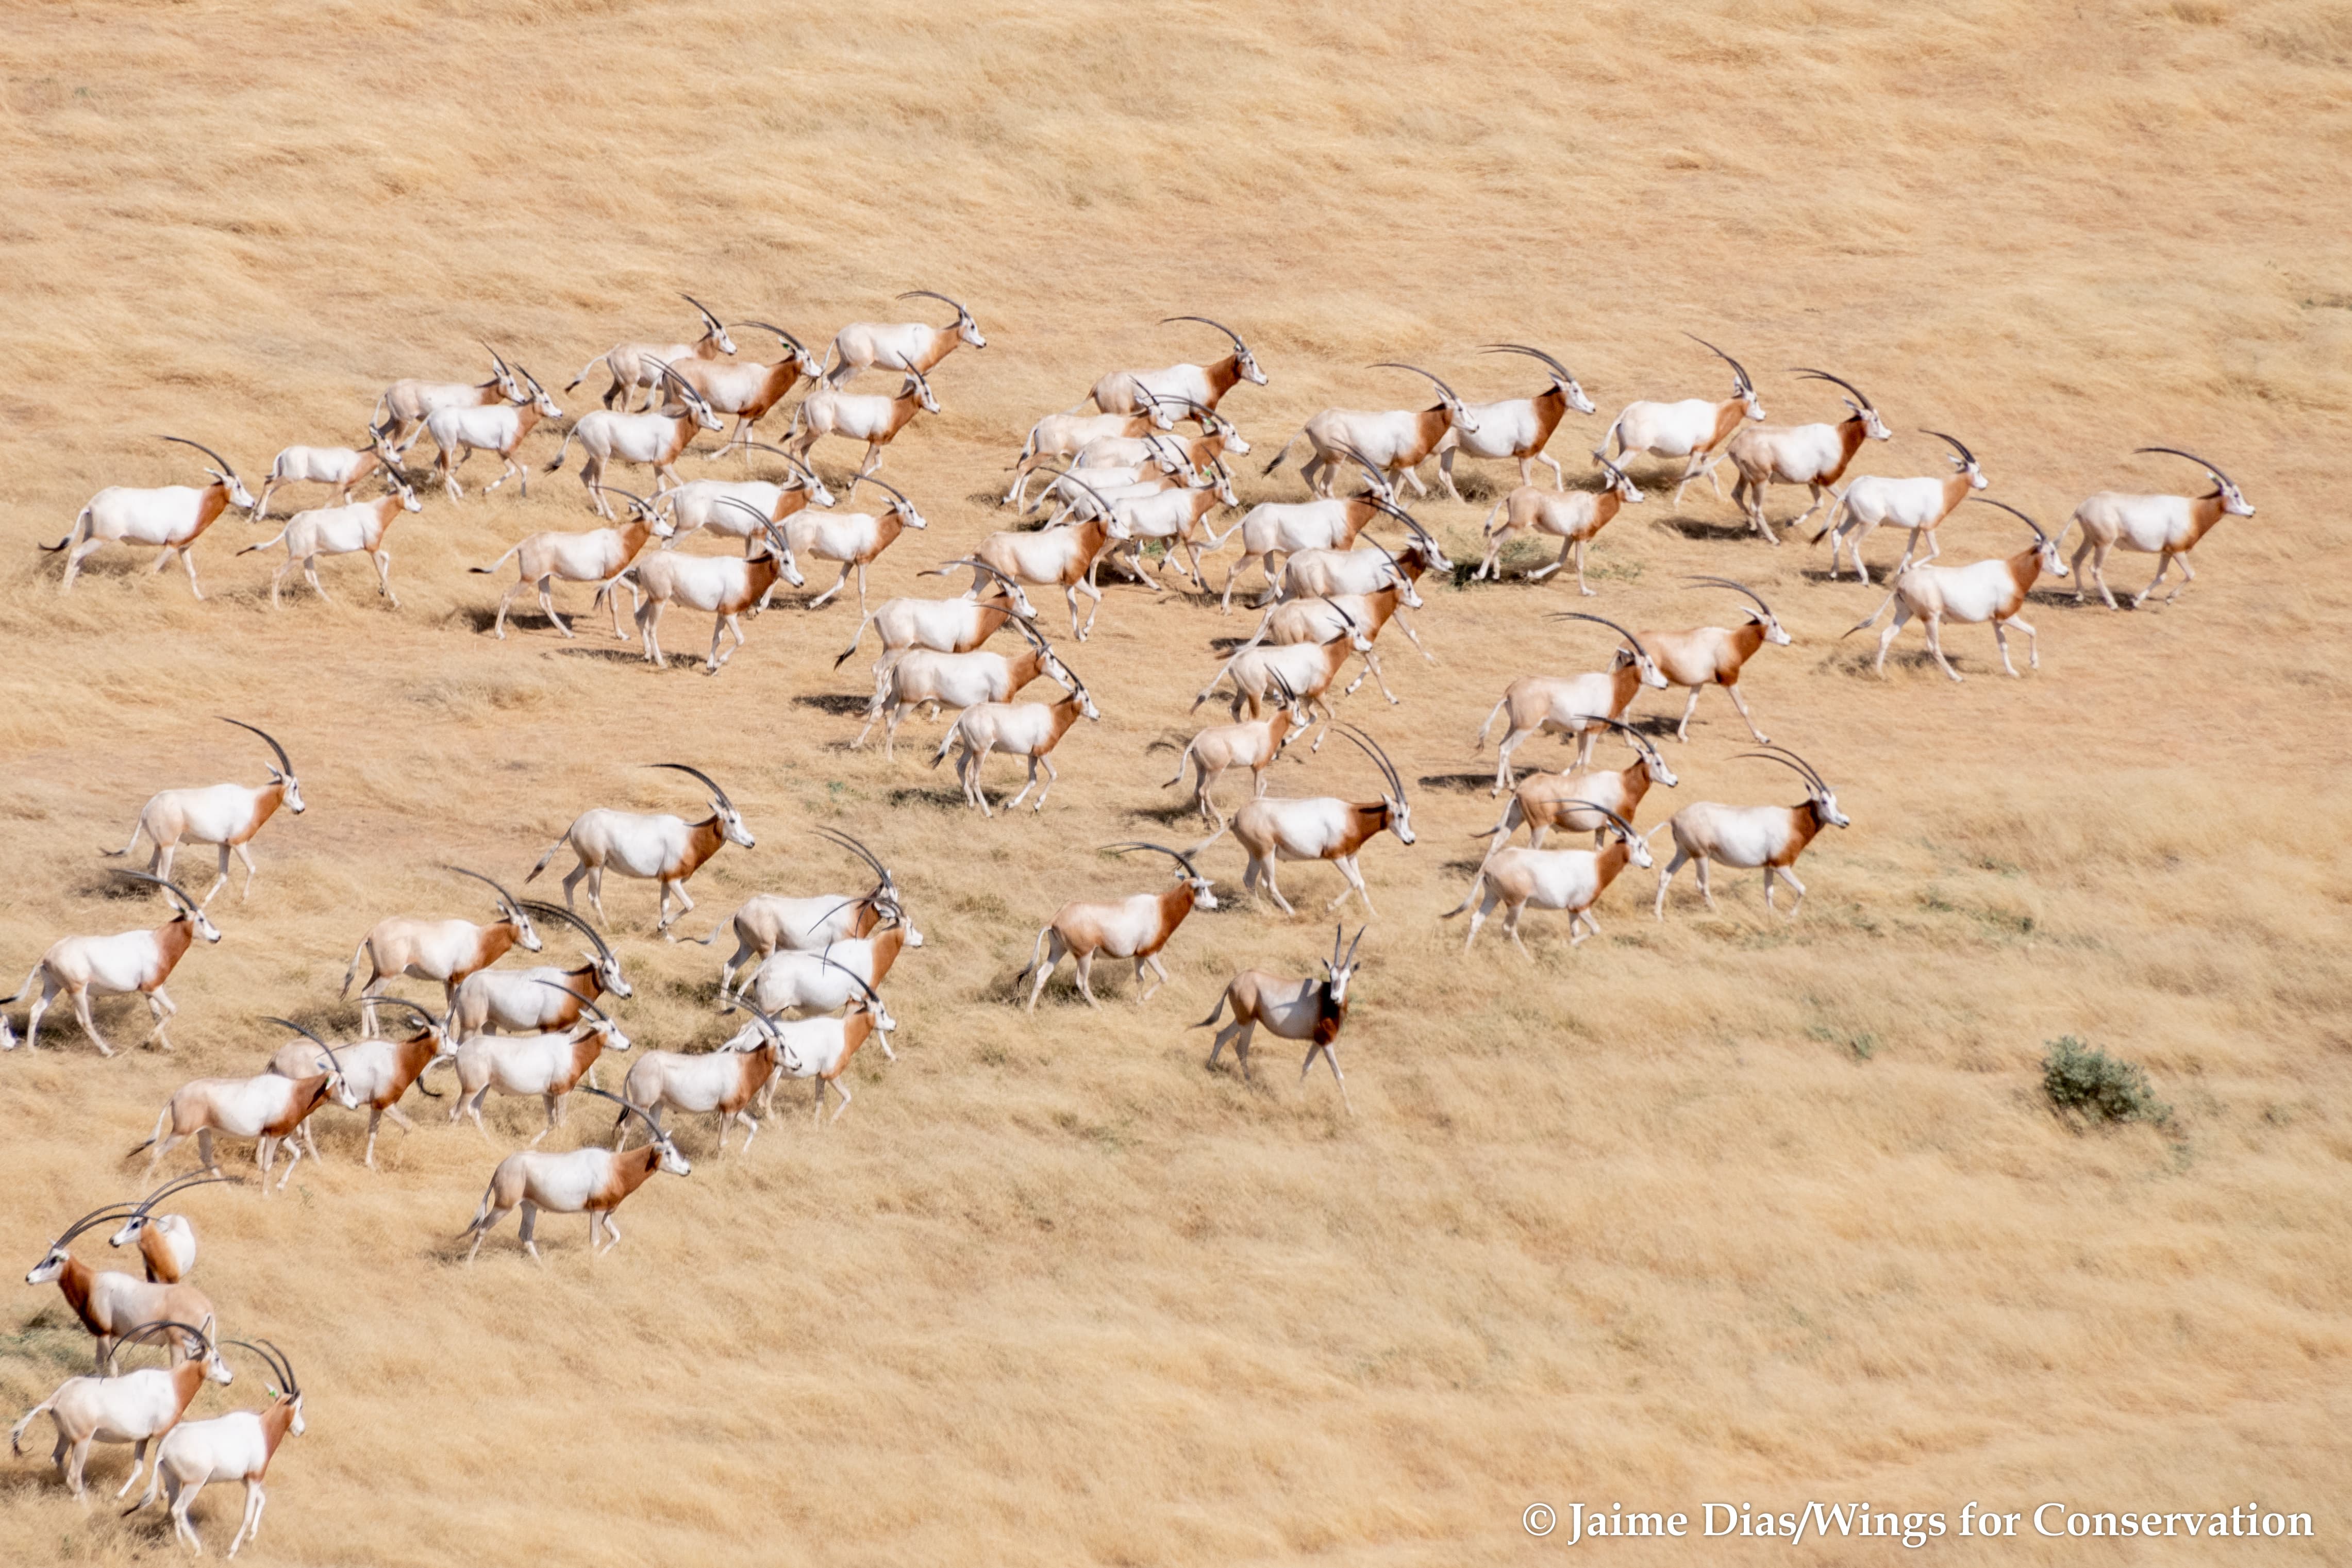 Free ranging scimitar-horned oryx herd